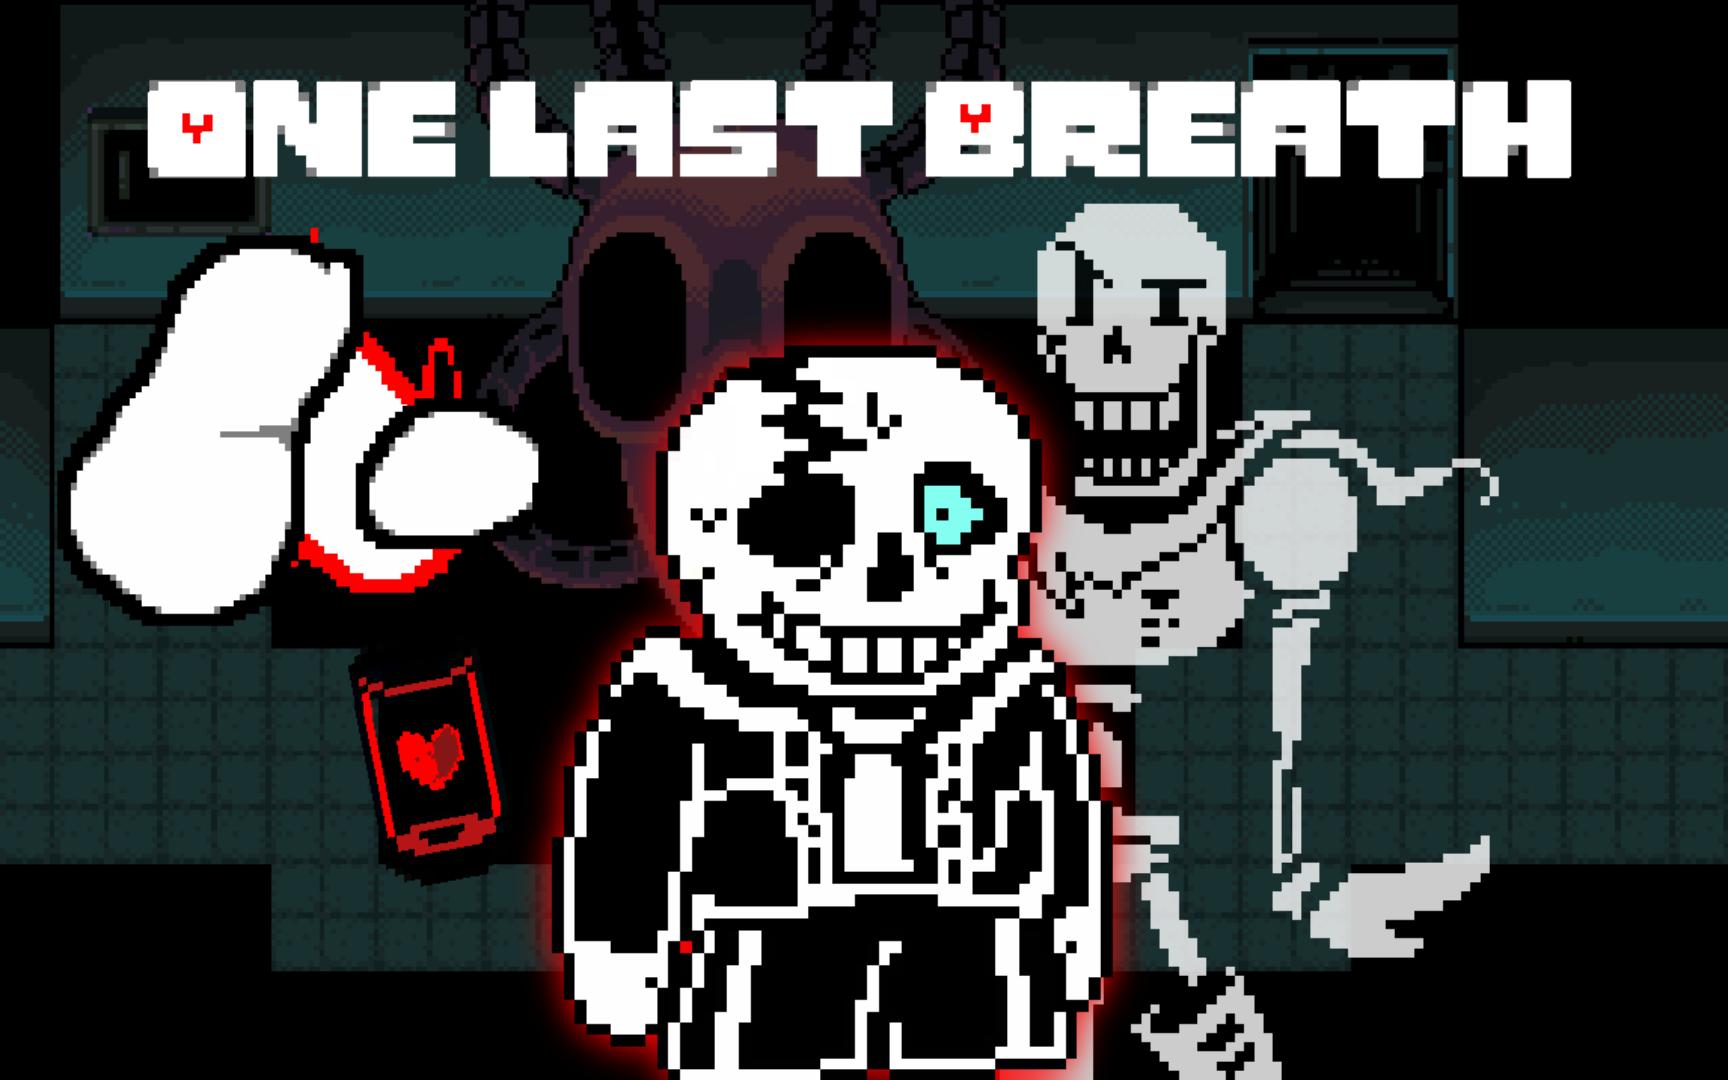 last breath sans图片